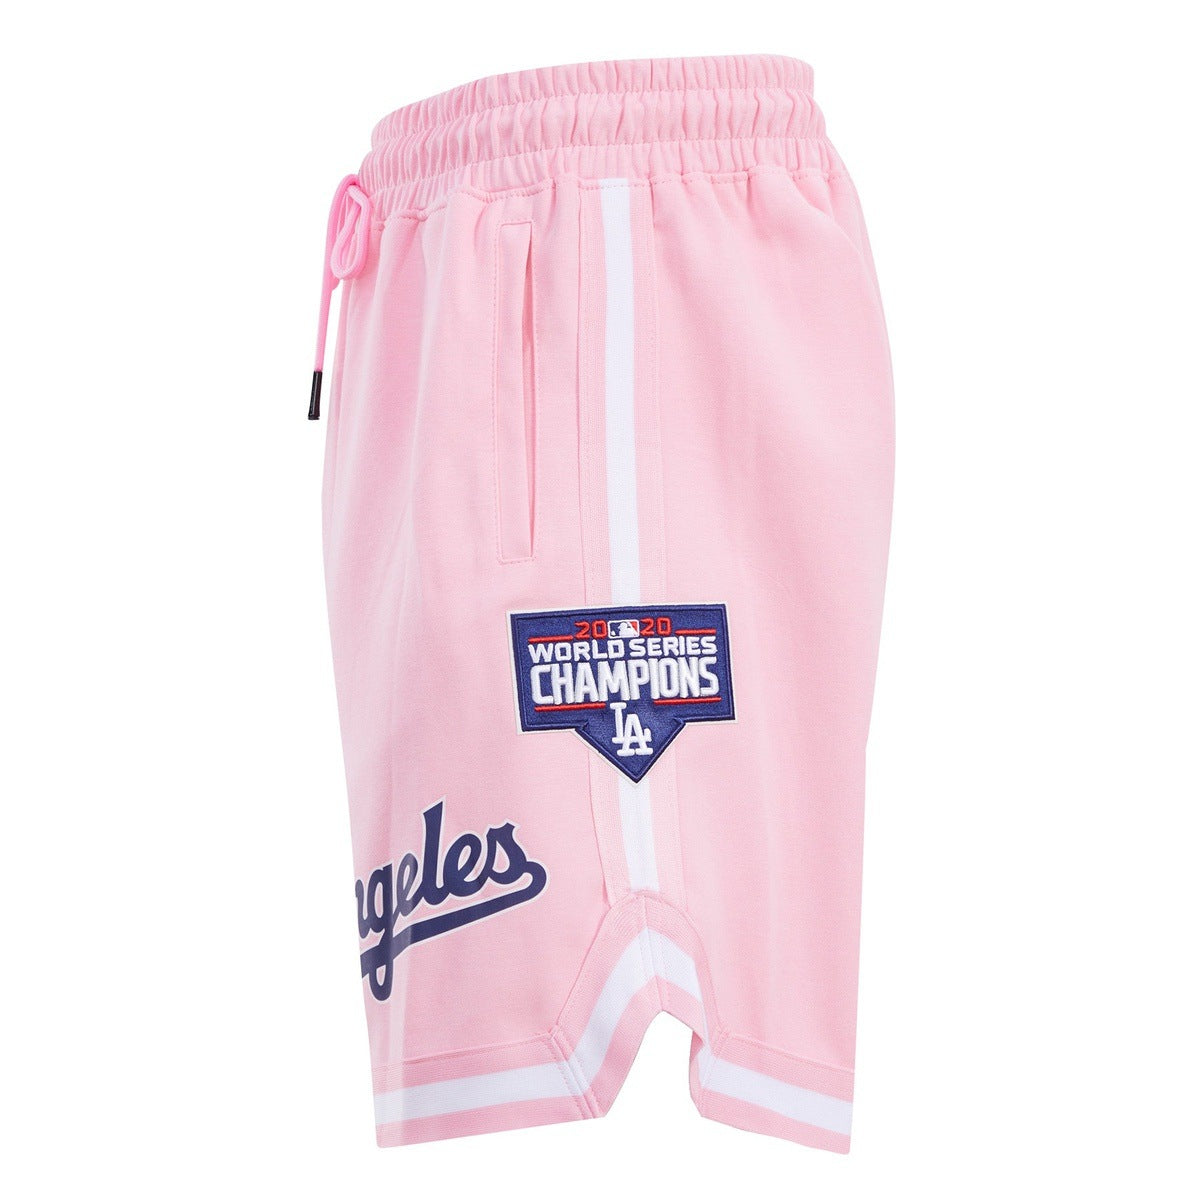 Men's Los Angeles Dodgers Pro Standard Camo Team Shorts